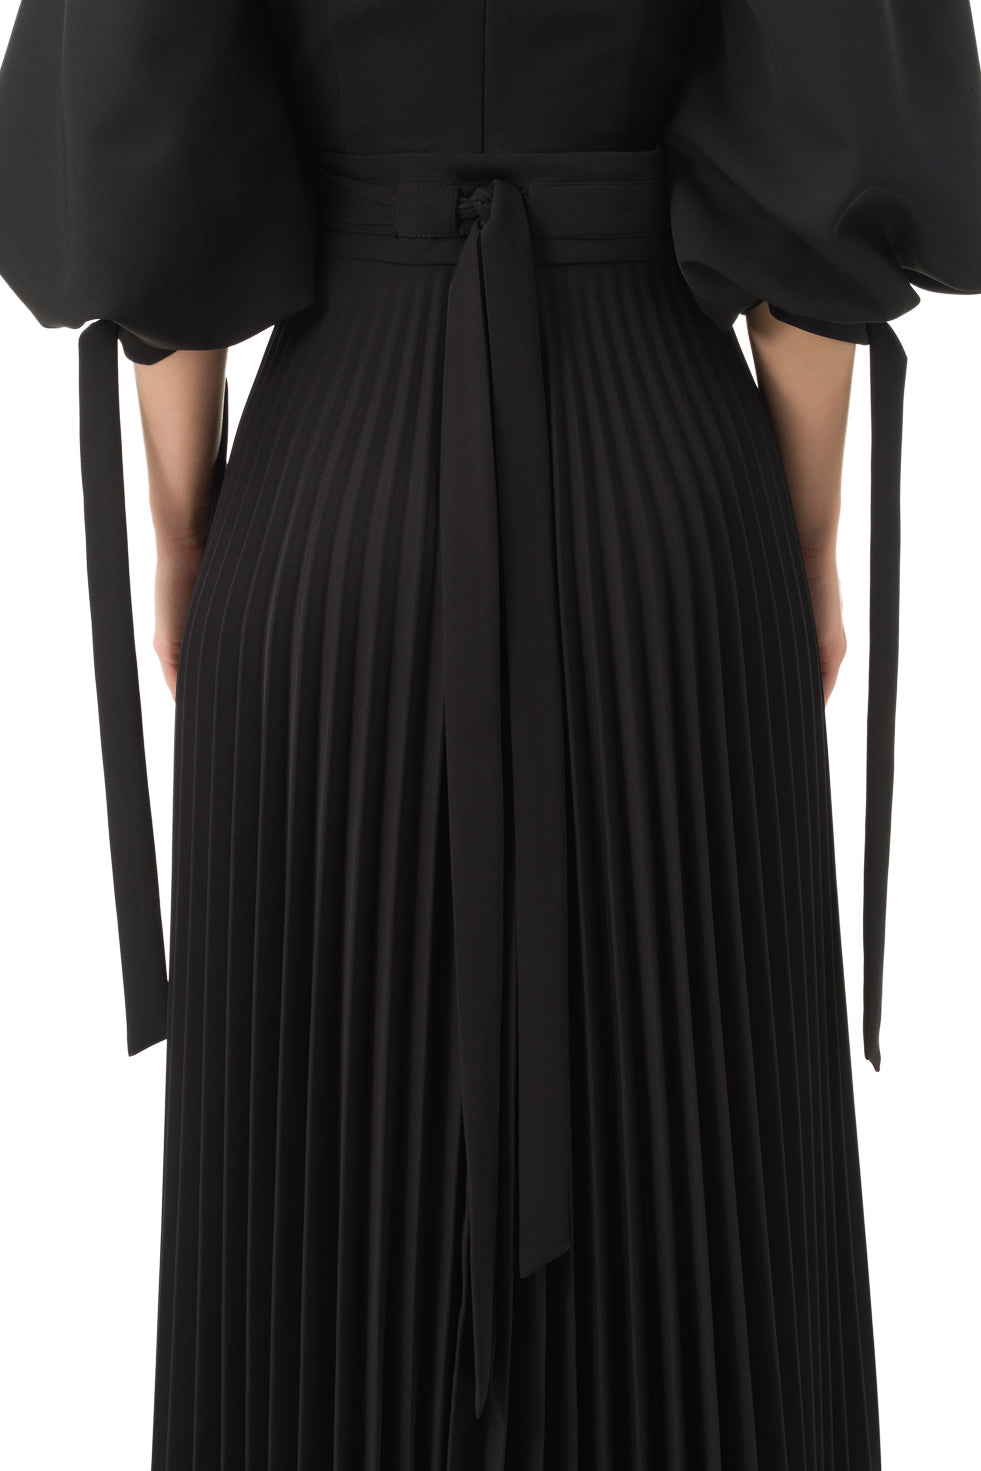 Tammarra Black Asymmetric Pleated Long Skirt